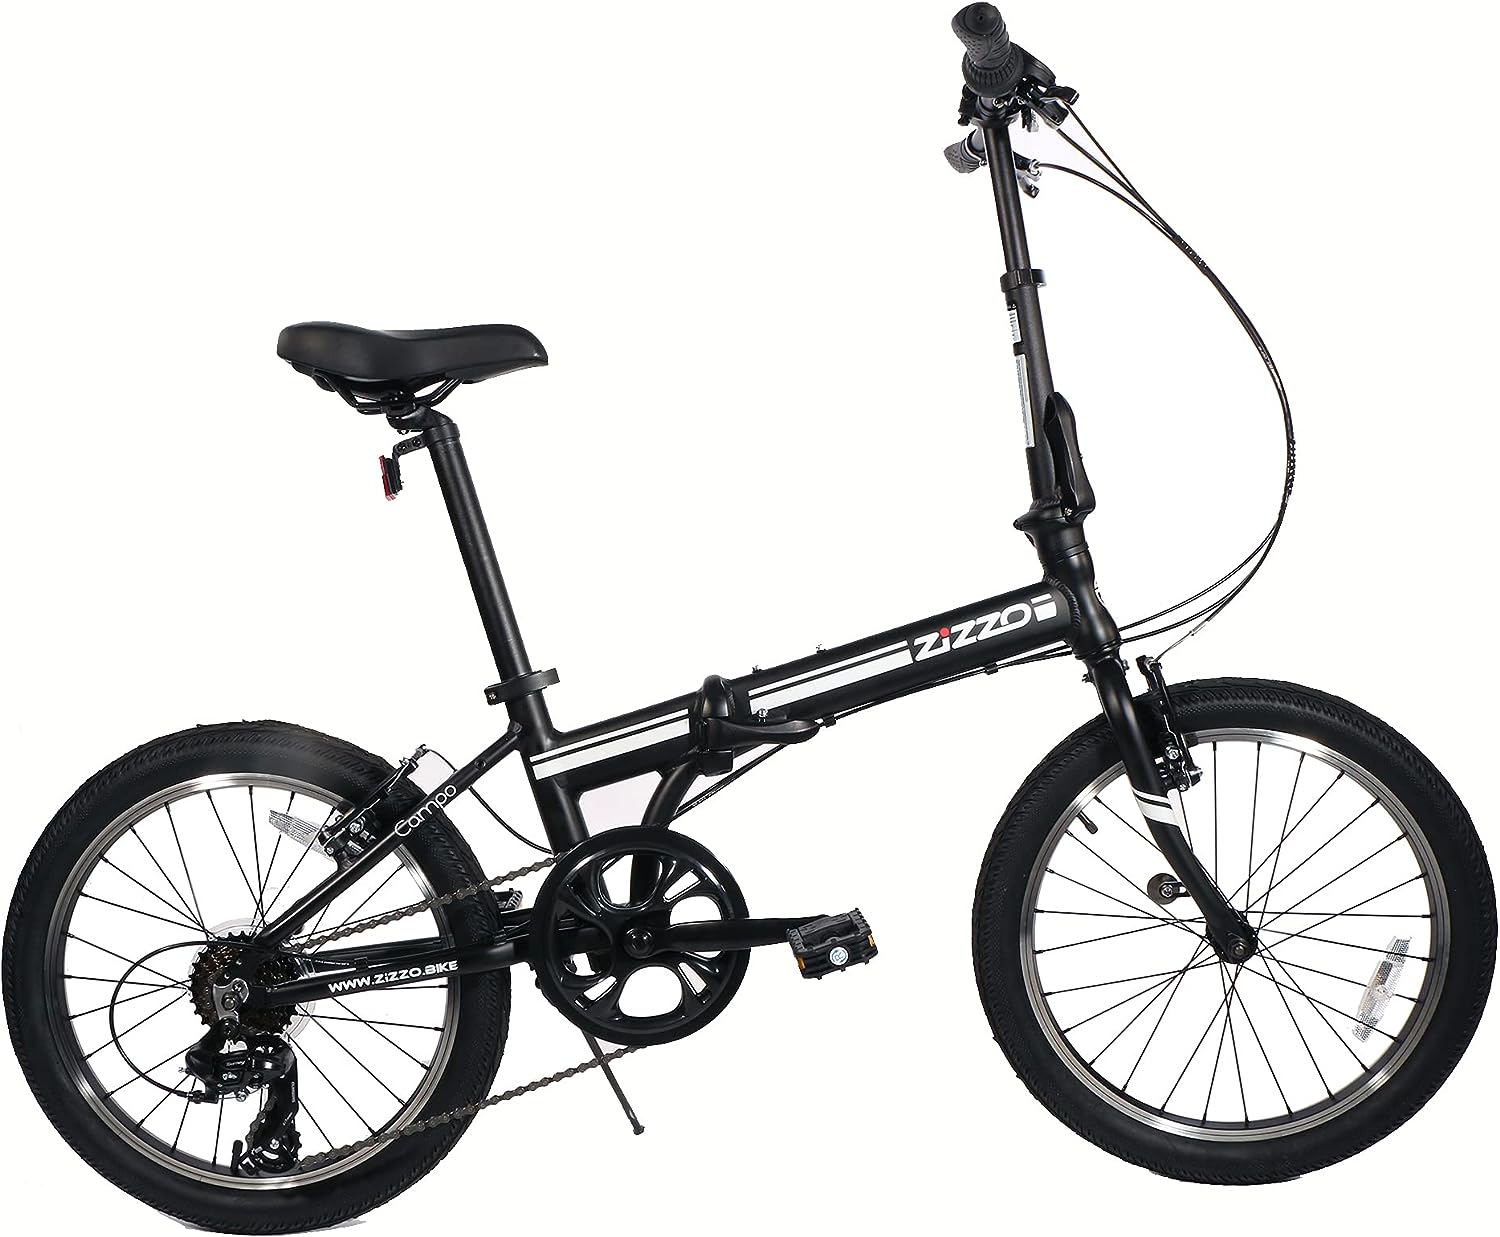 ZiZZO Campo 20 inch Folding Bike with 7-Speed, Adjustable Stem, Light Weight Frame